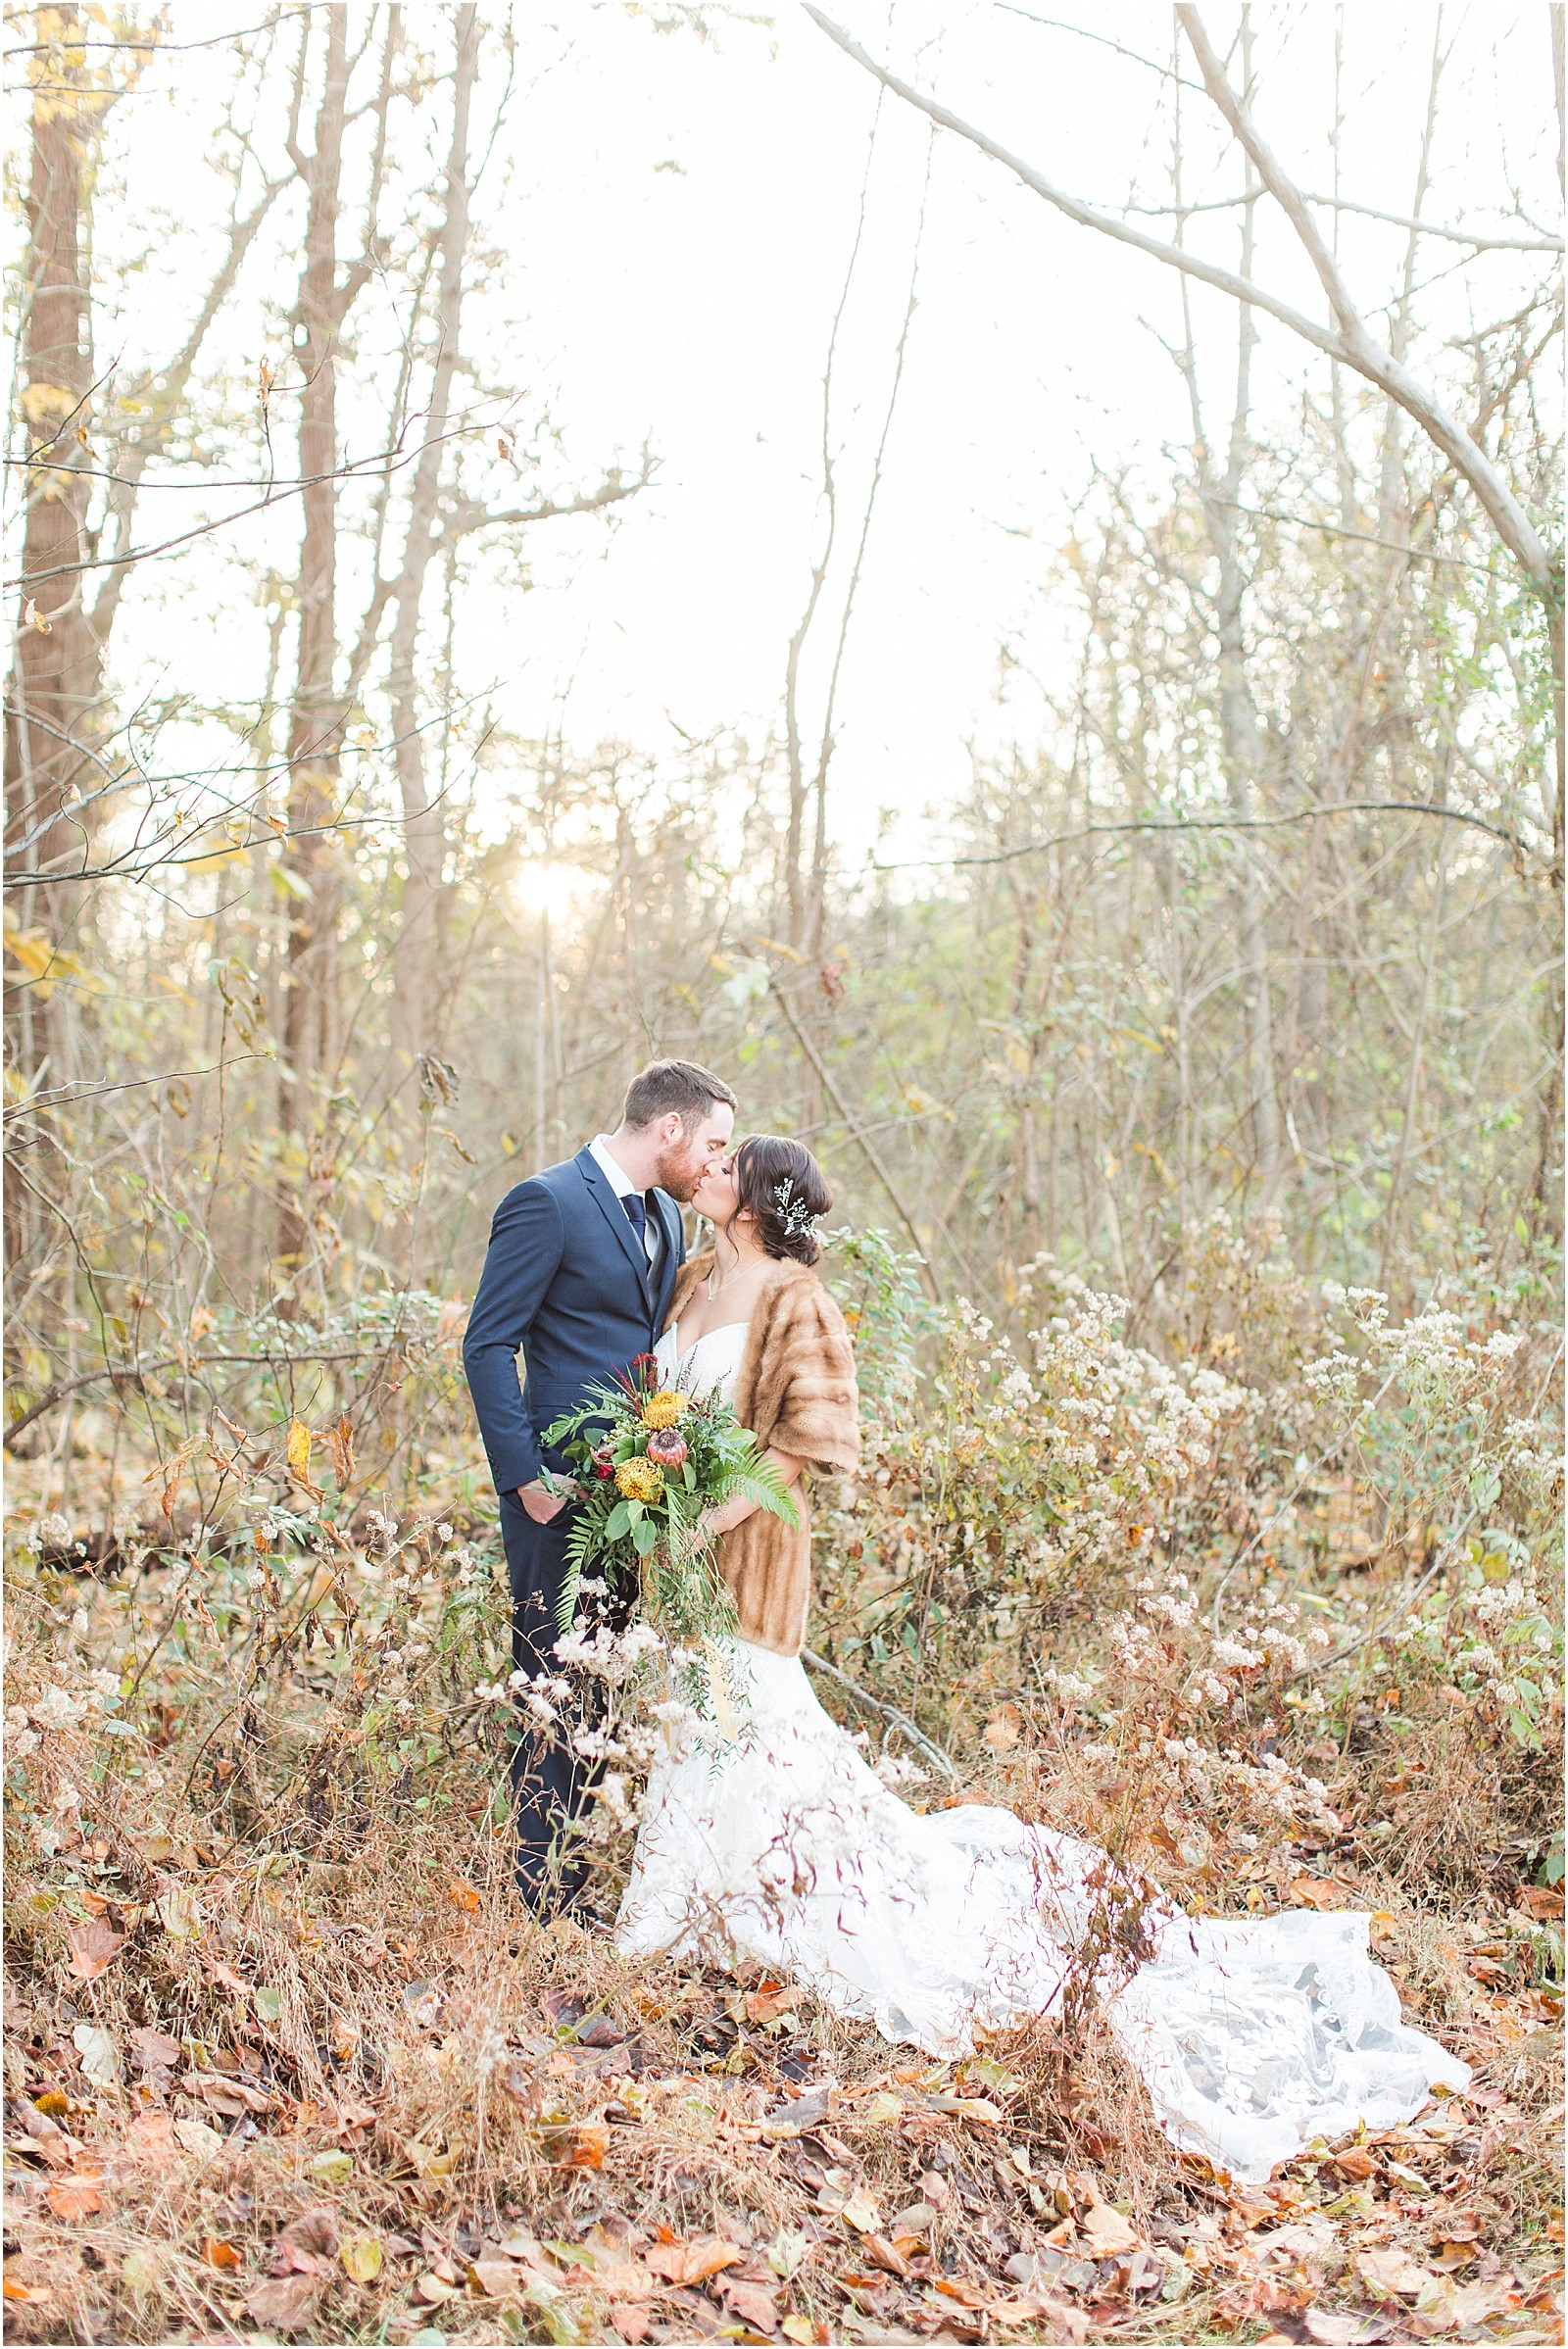 Walker and Alyssa's intimate fall wedding in Southern Indiana. | Wedding Photography | The Corner House Wedding | Southern Indiana Wedding | #fallwedding #intimatewedding | 077.jpg